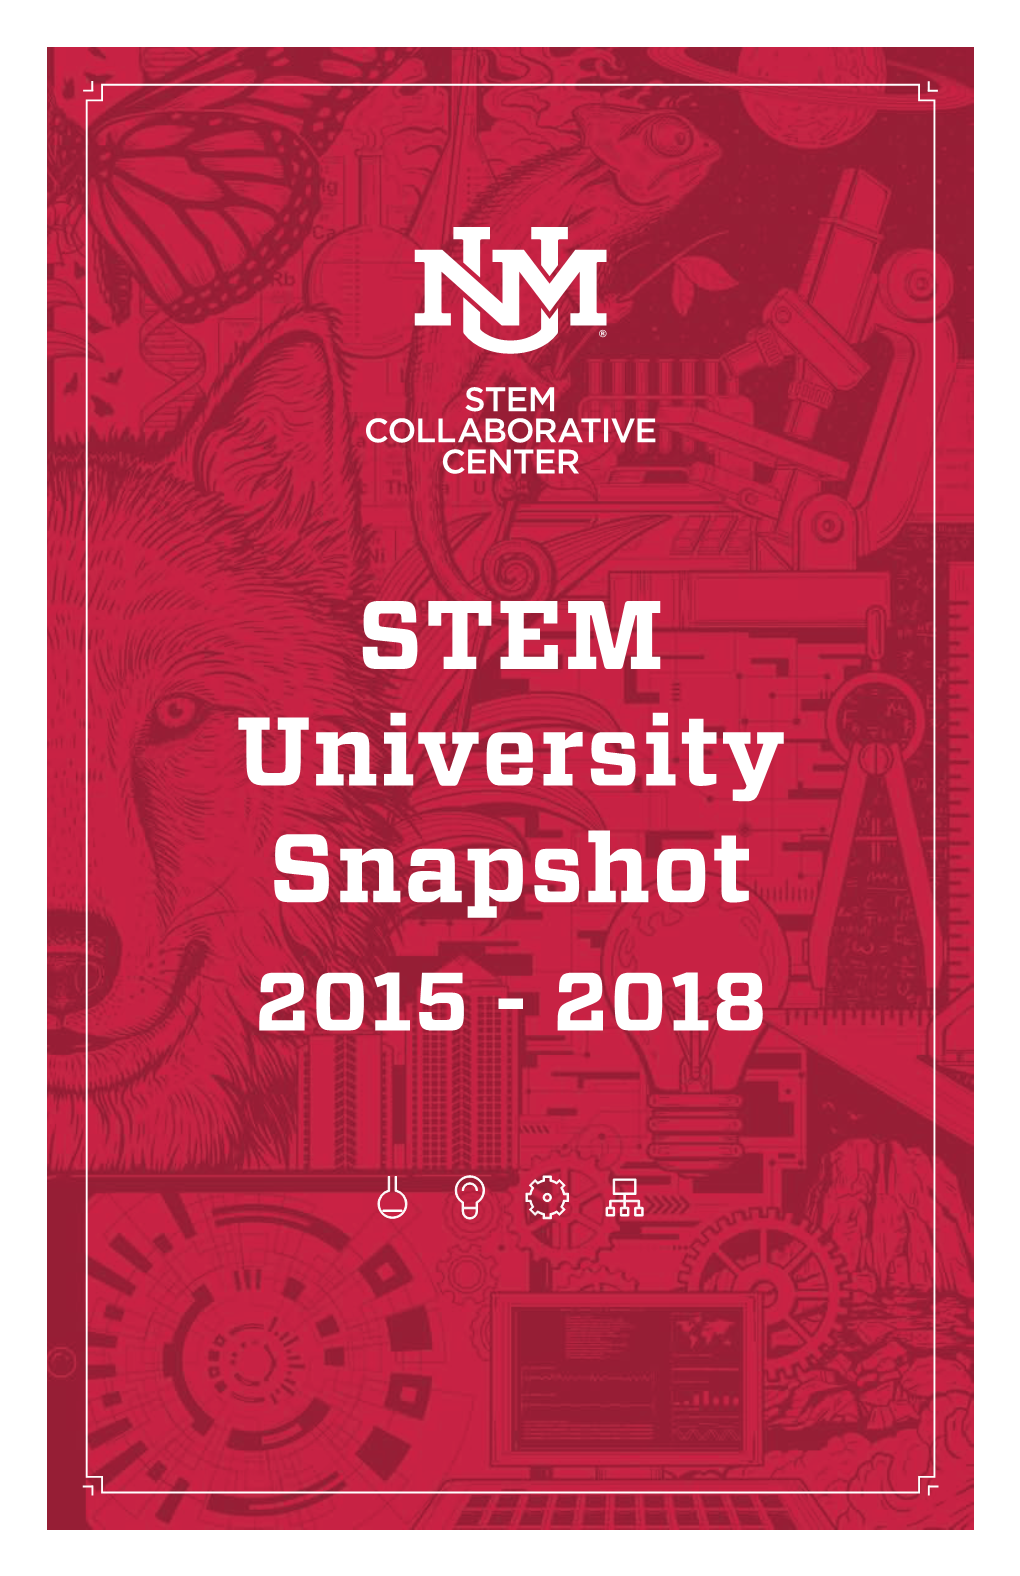 STEM University Snapshot 2015 - 2018 STEM University Is the Student Engagement Component of the UNM STEM Collaborative Center (STCC)